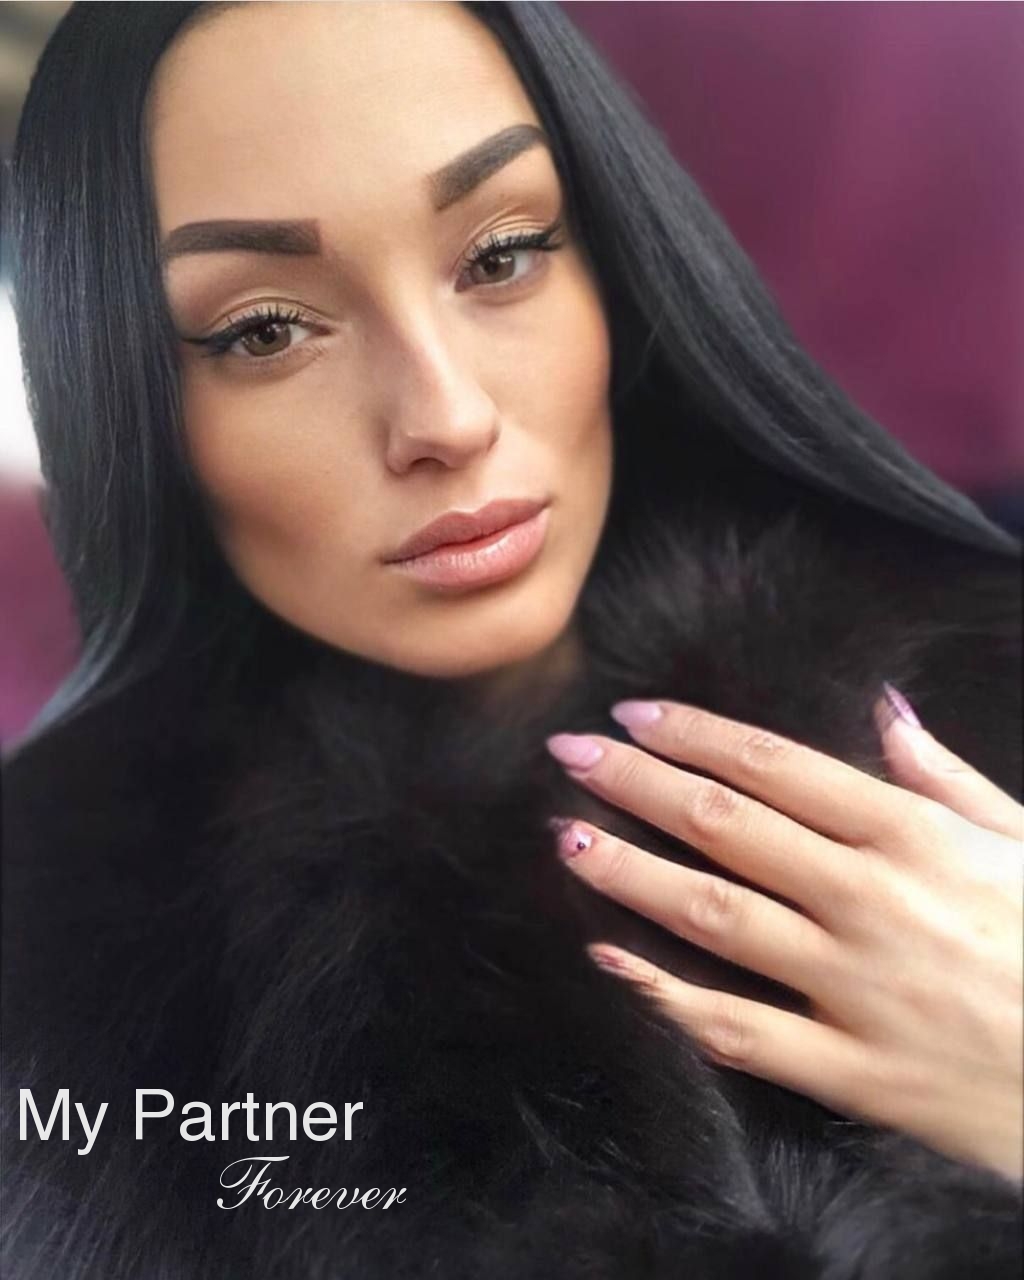 Dating Site to Meet Single Ukrainian Lady Yana from Dniepropetrovsk, Ukraine